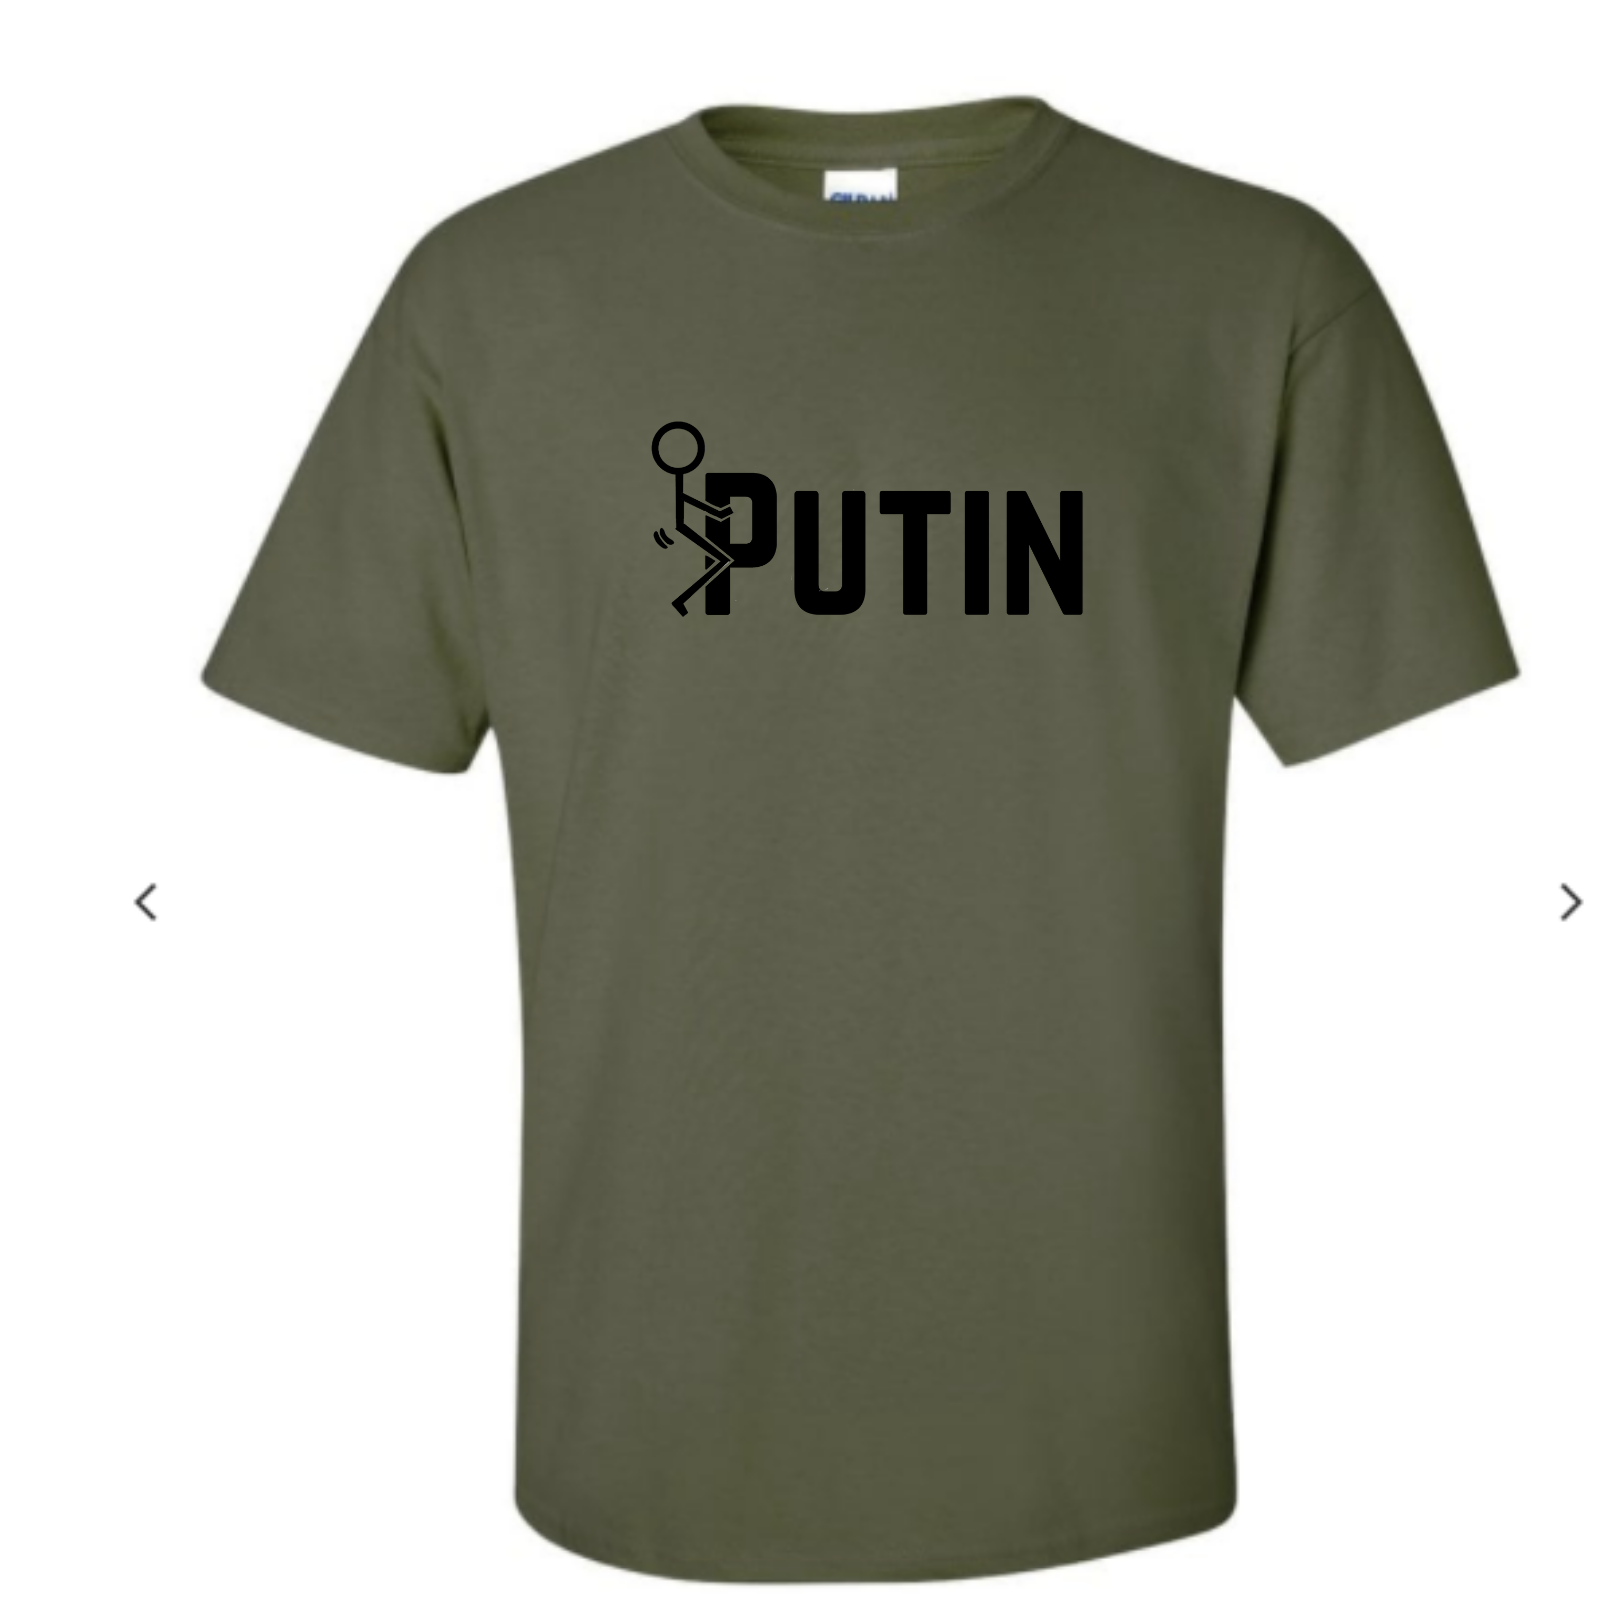 F Putin - Graphic T-Shirt - Mister Snarky's